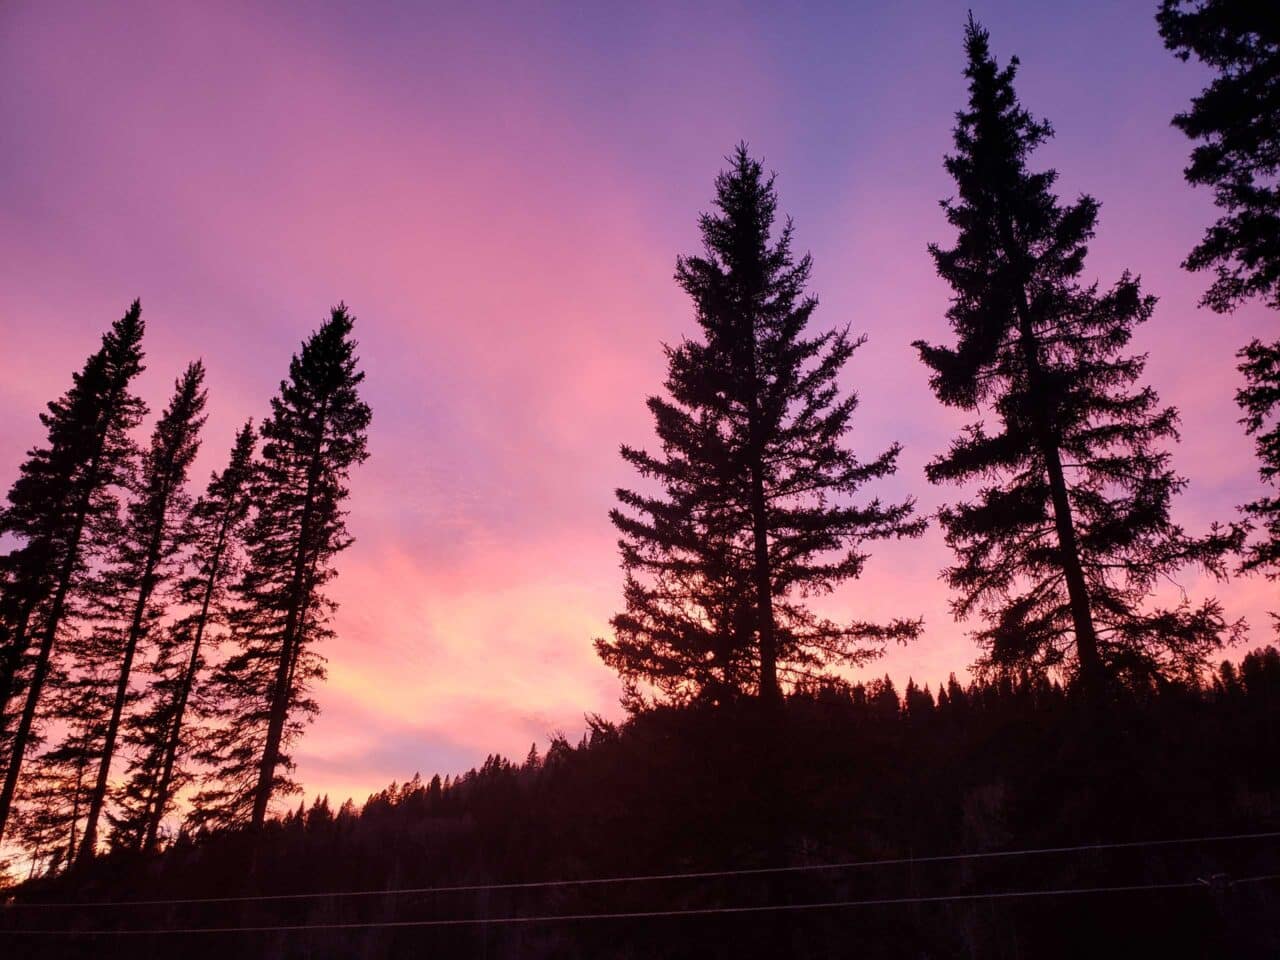 Trees On The Horizon At Sunset